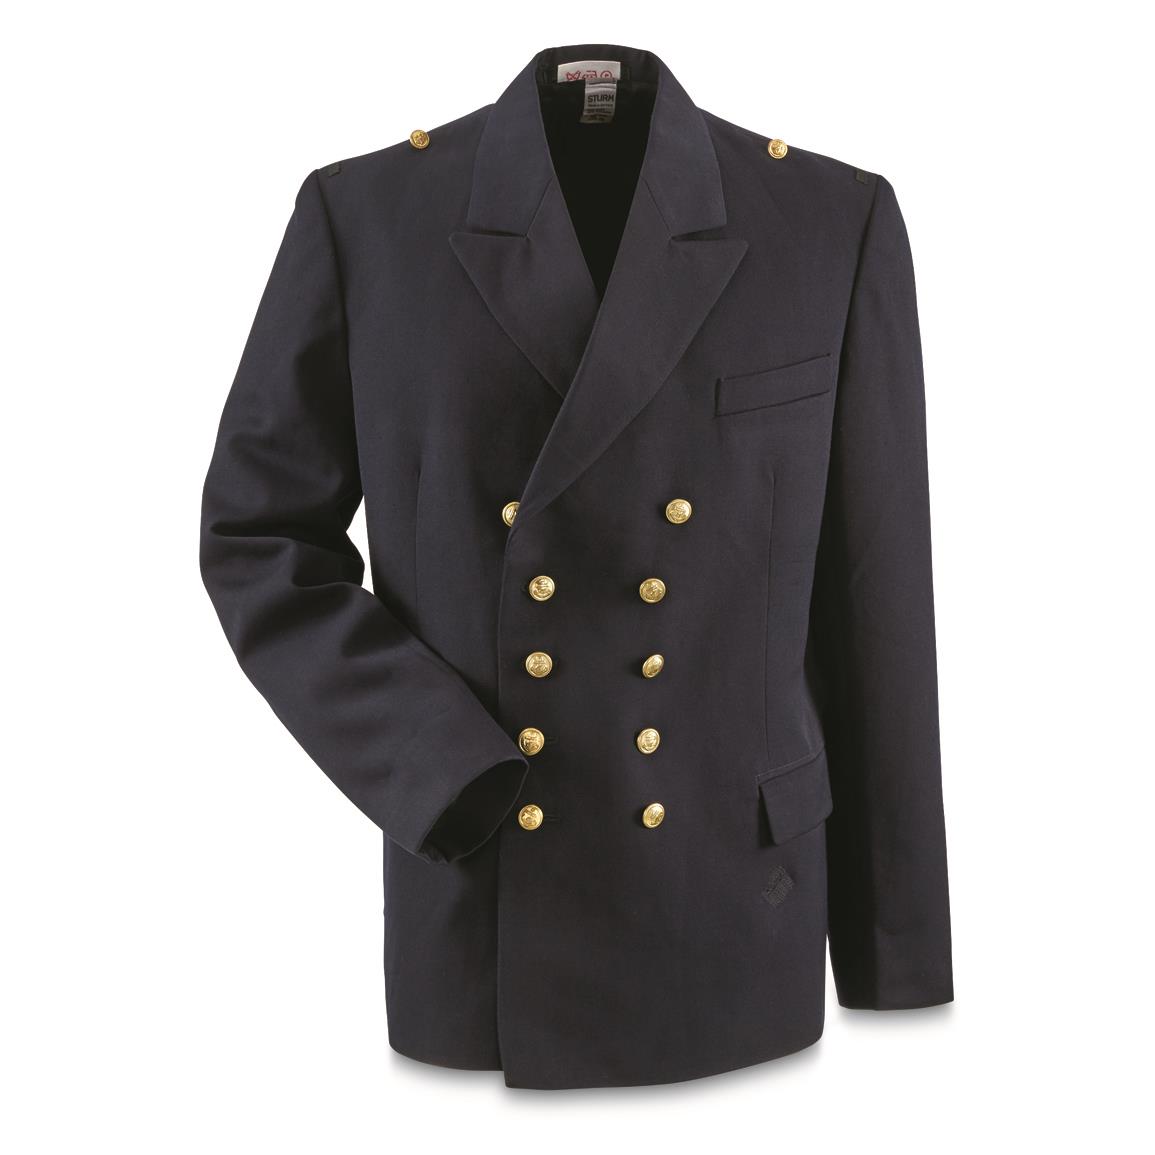 German Navy Wool Blend Double Breasted Dress Jacket, Like New